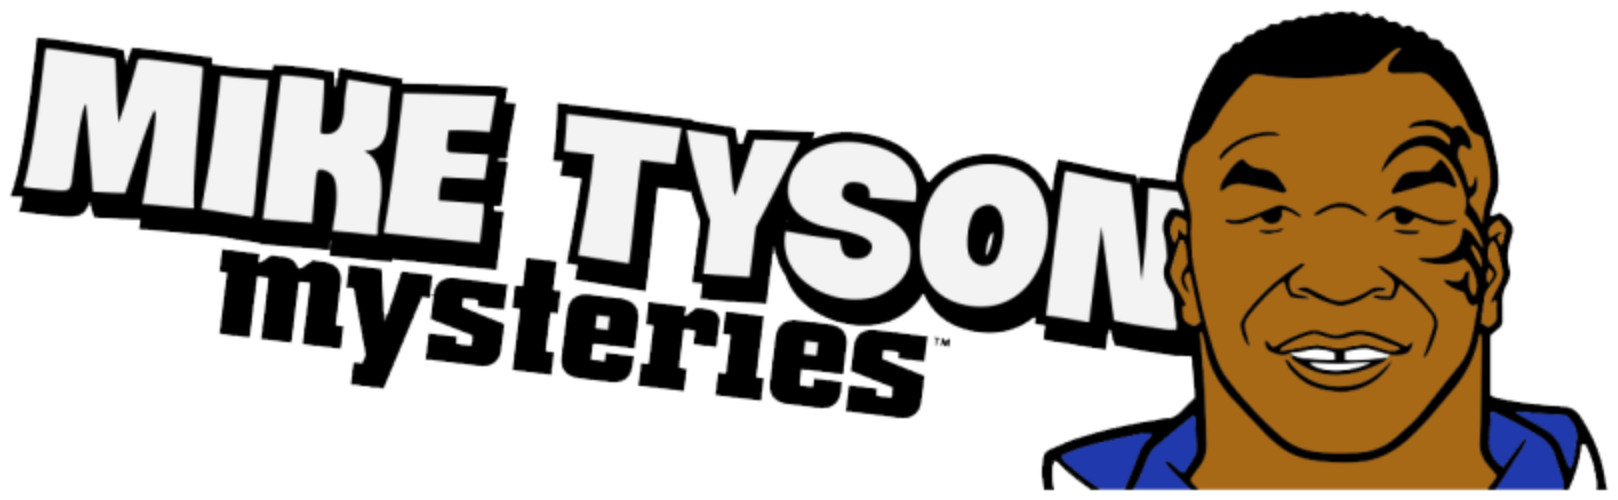 Mike Tyson Mysteries 